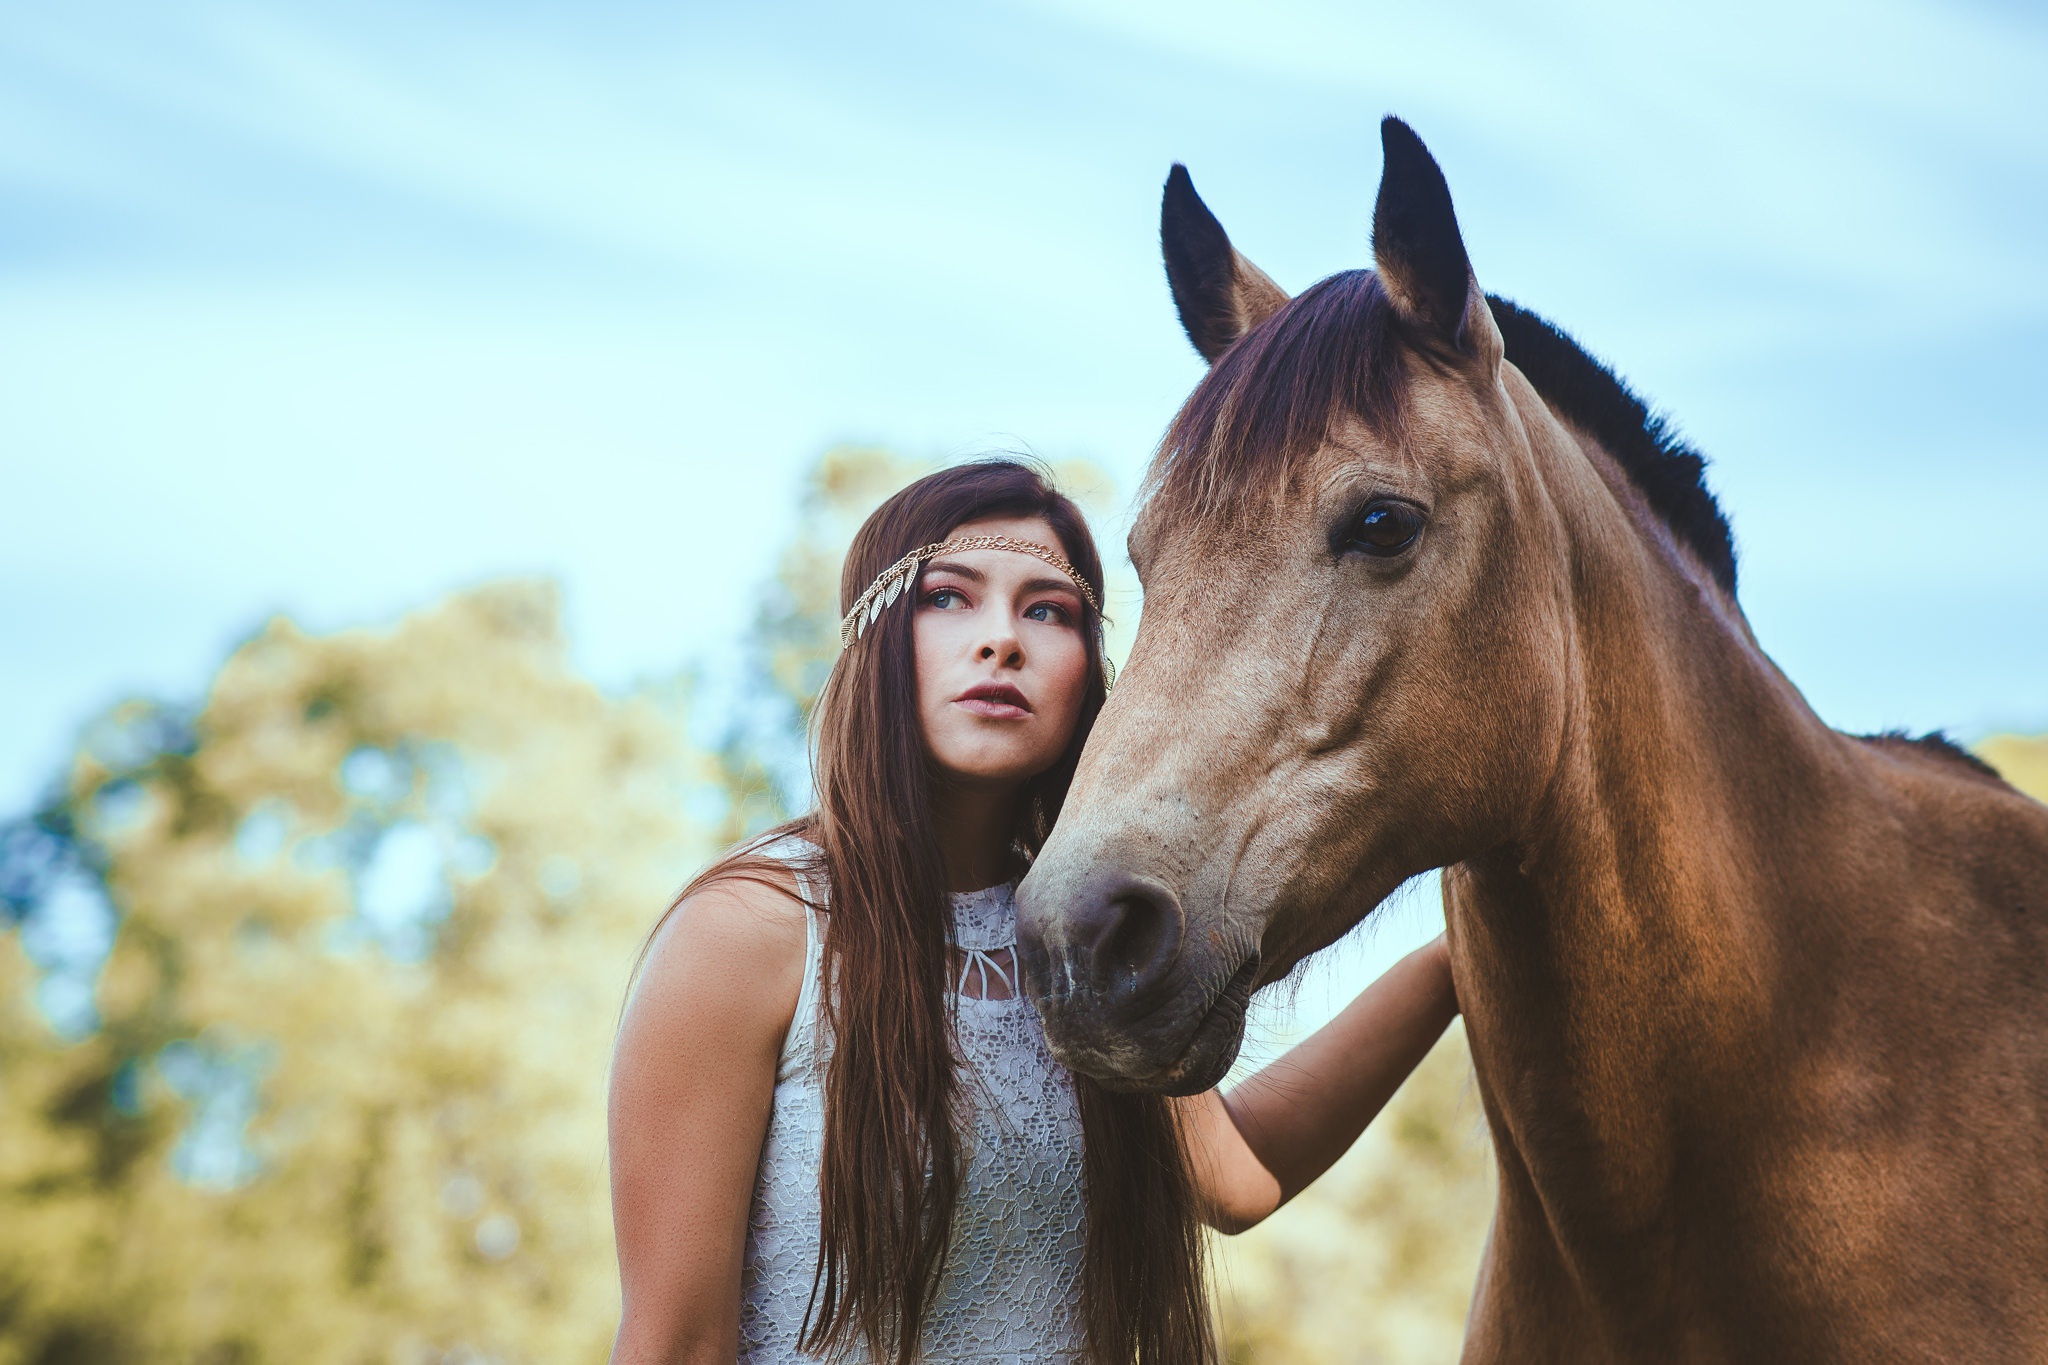 Девочка с лошадкой. Фотосессия с лошадьми. Девушка с лошадью. Девчонки на лошадях. Девушка на коне.